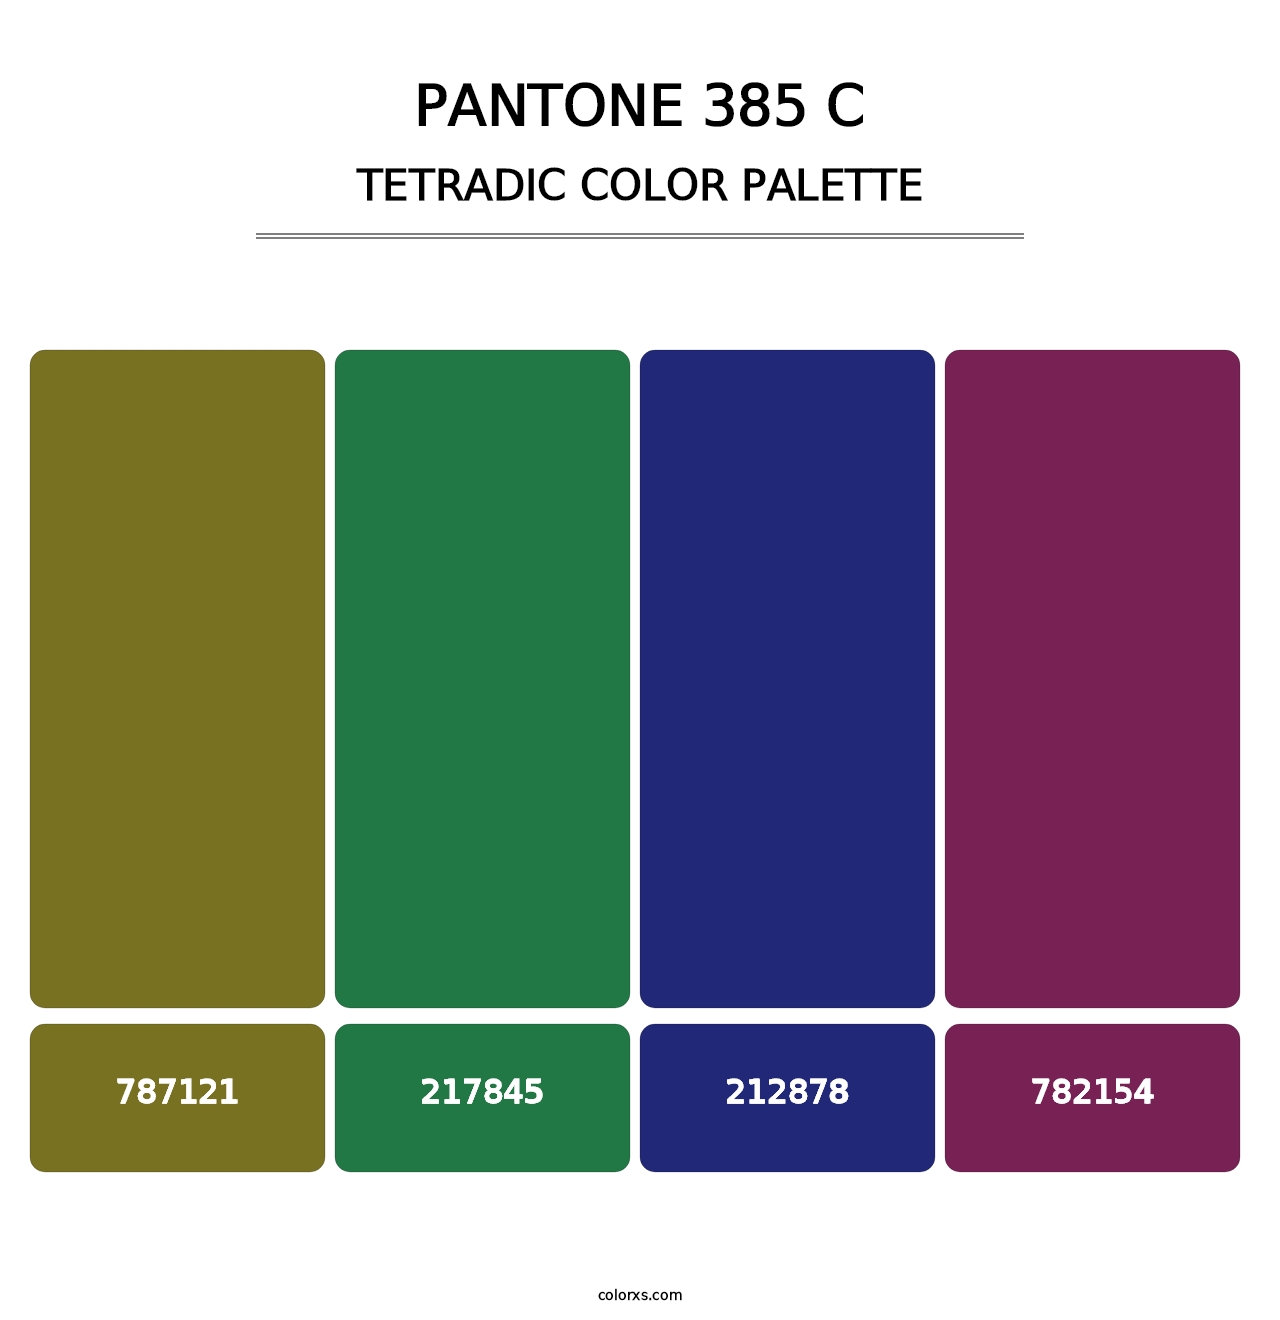 PANTONE 385 C - Tetradic Color Palette